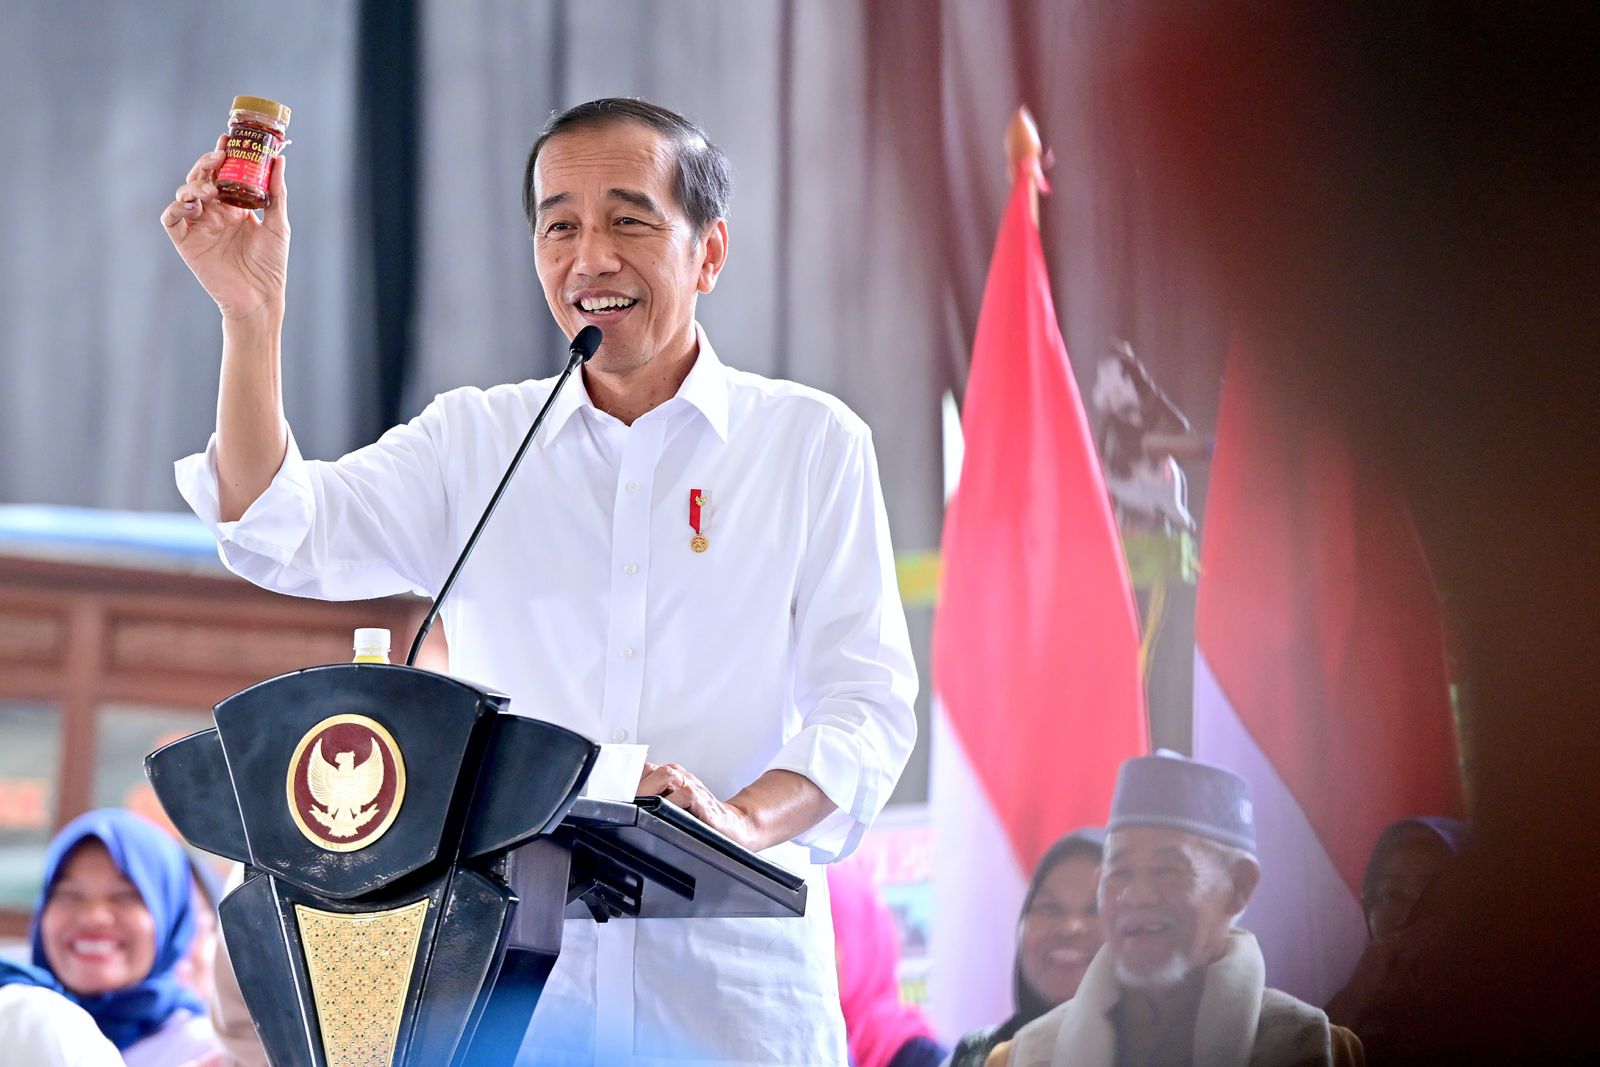 Kreatif Bikin Nama Kemasan, Produk Nasabah PNM Mekaar ini Jadi Guyonan Jokowi